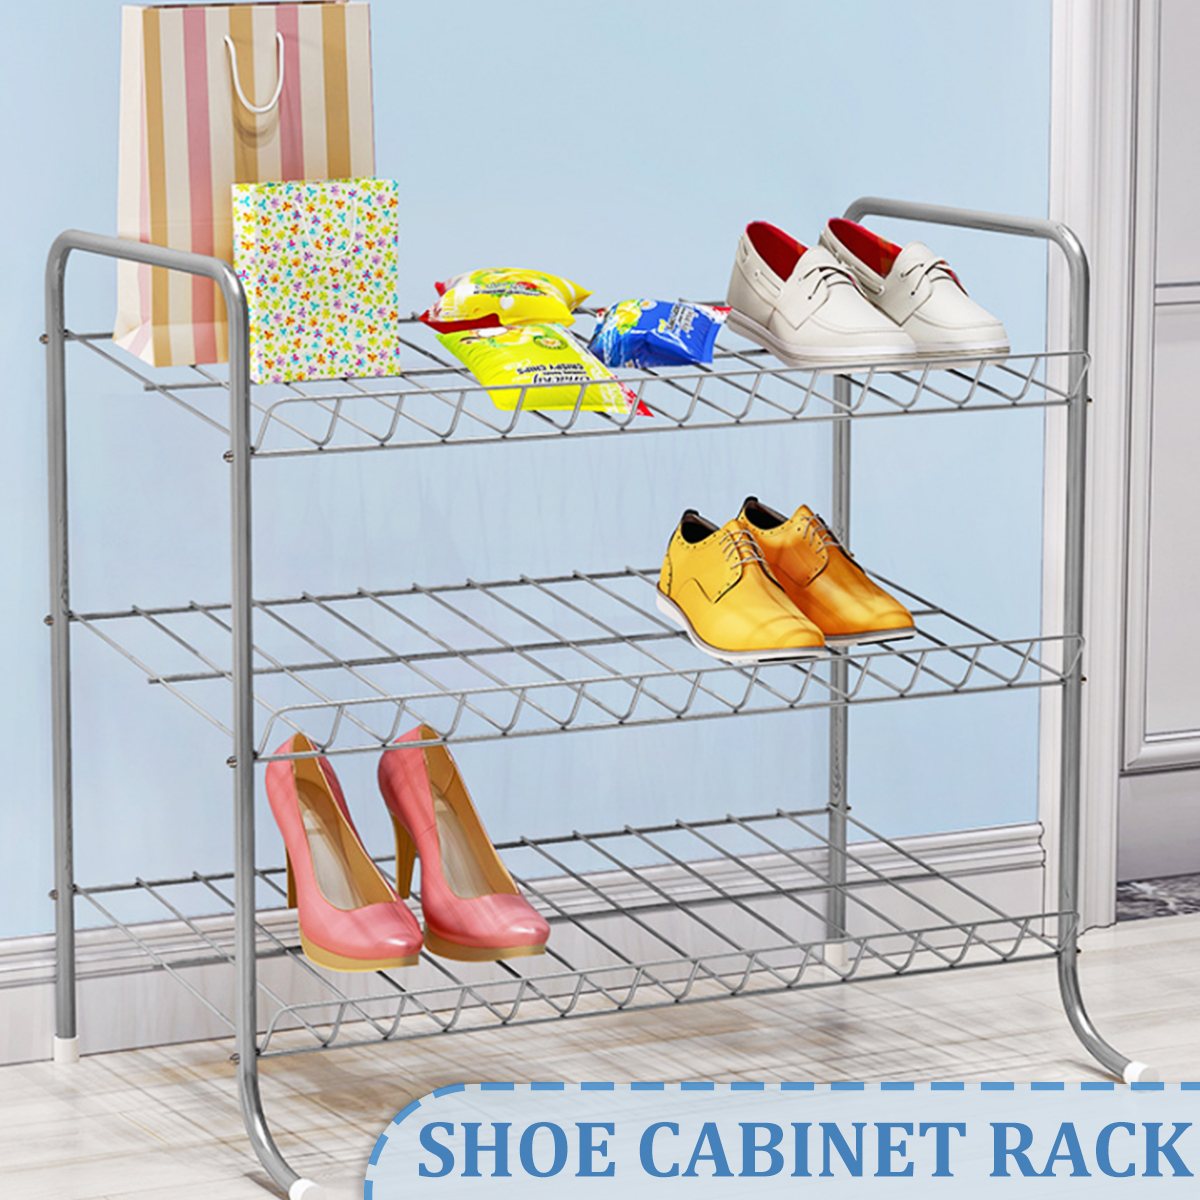 Cabinet-Rack-Storage-Shelf-Shoe-Racks-Organizer-Stand-Metal-Holder-Home-Kitchen-Tool-1617198-9